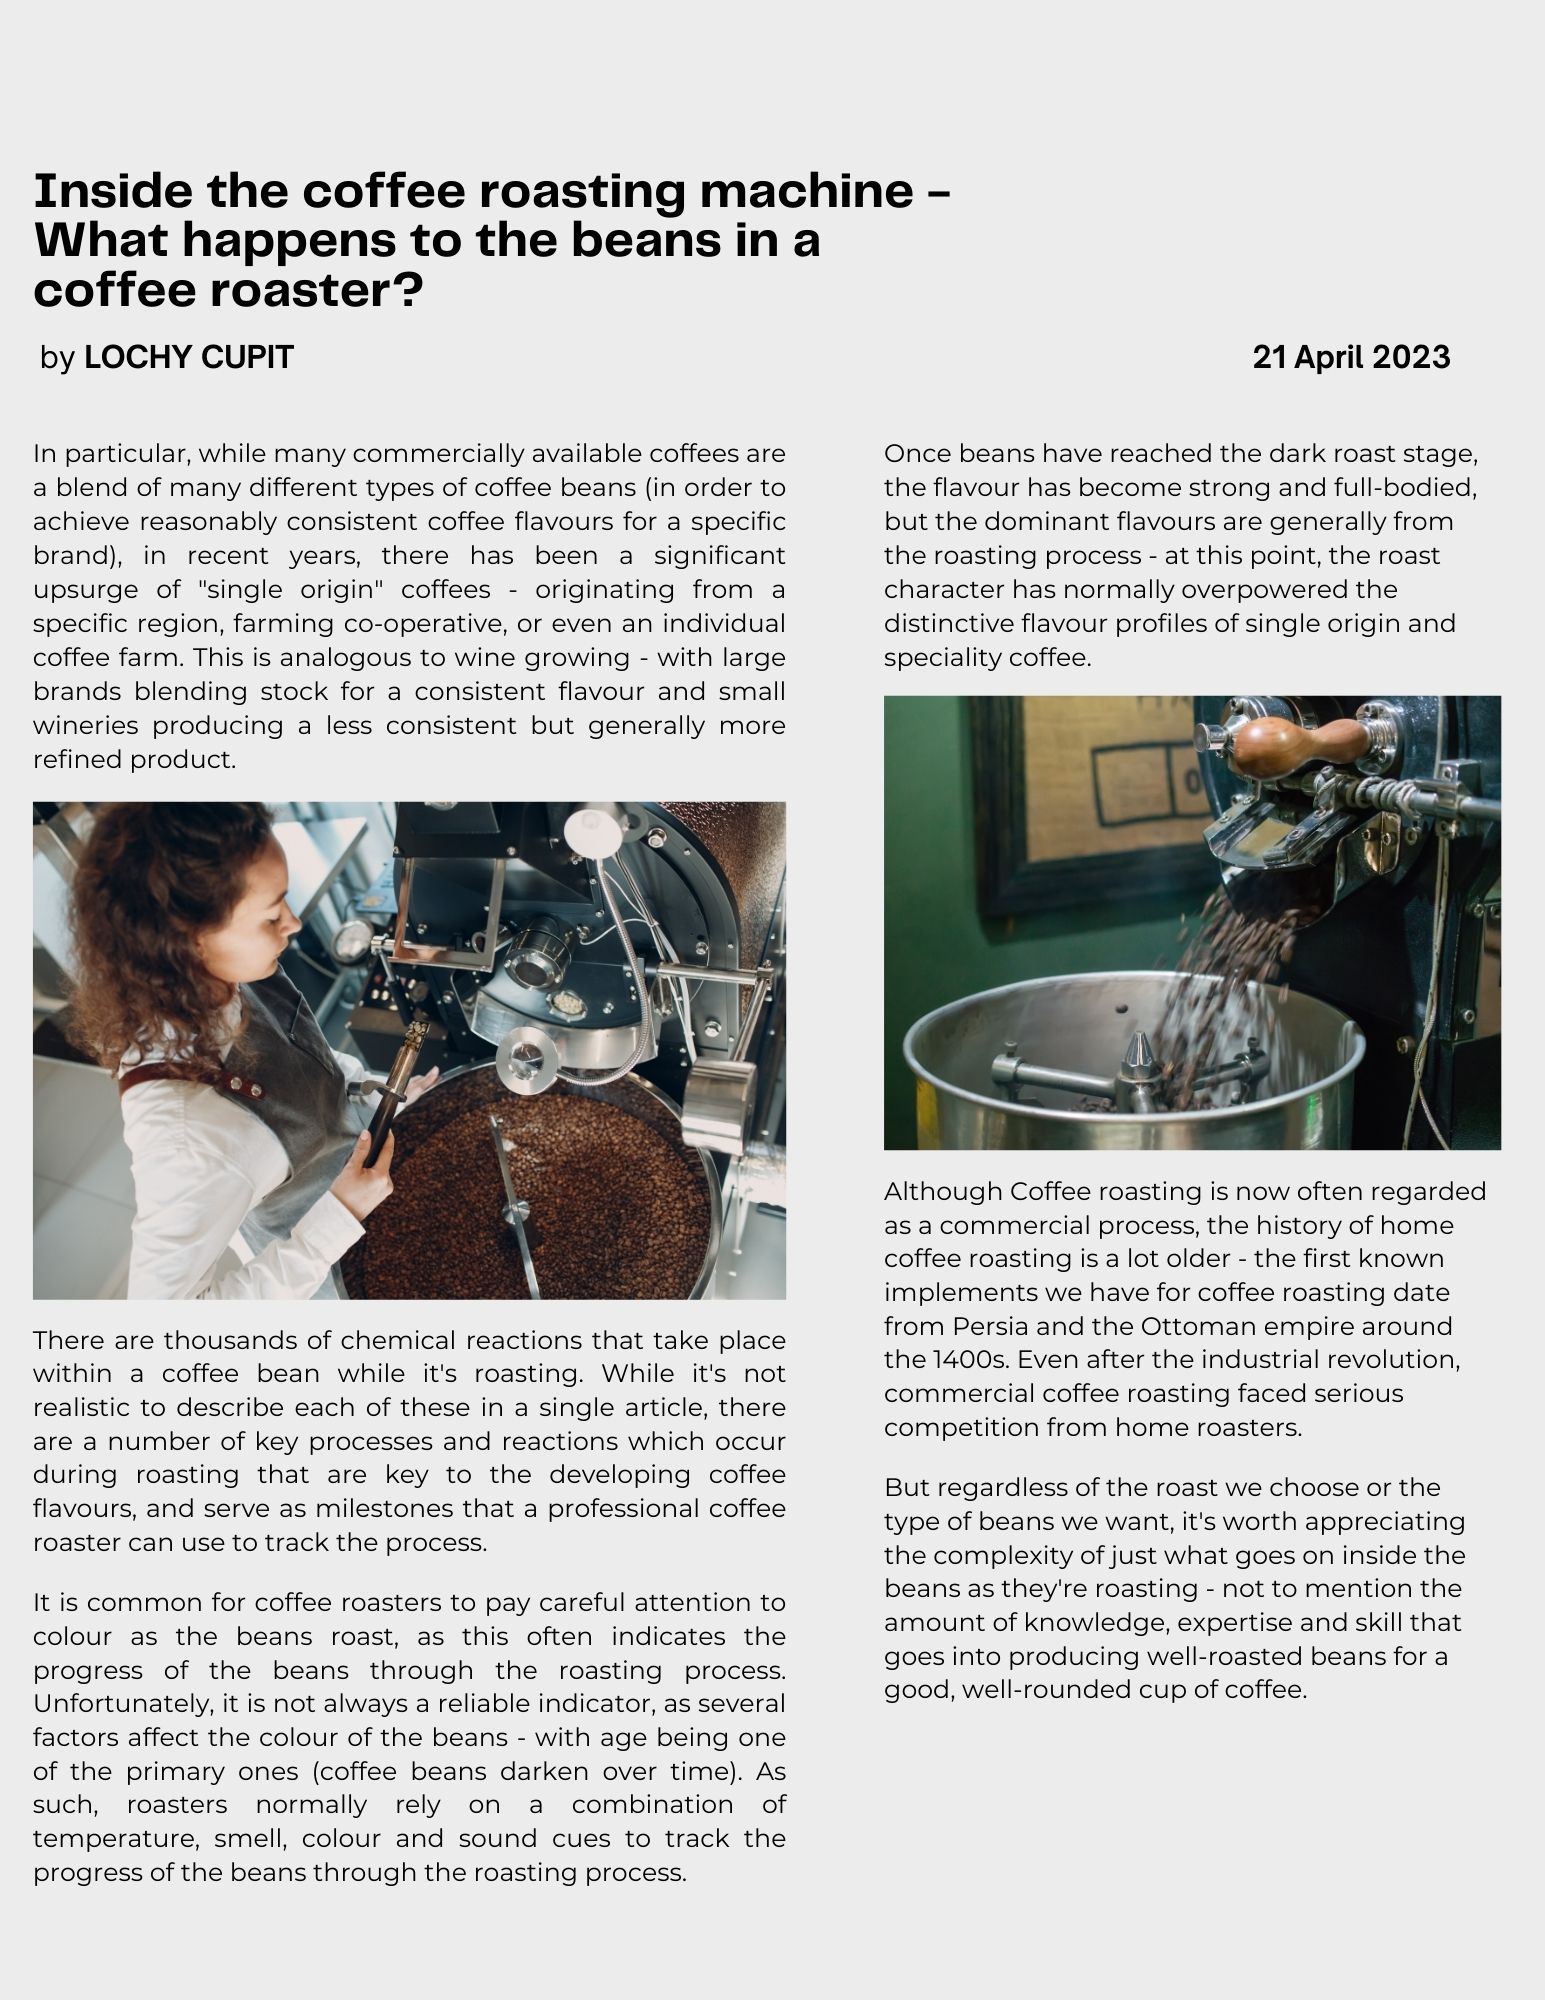 Coffee Research - Inside the coffee roasting machine 